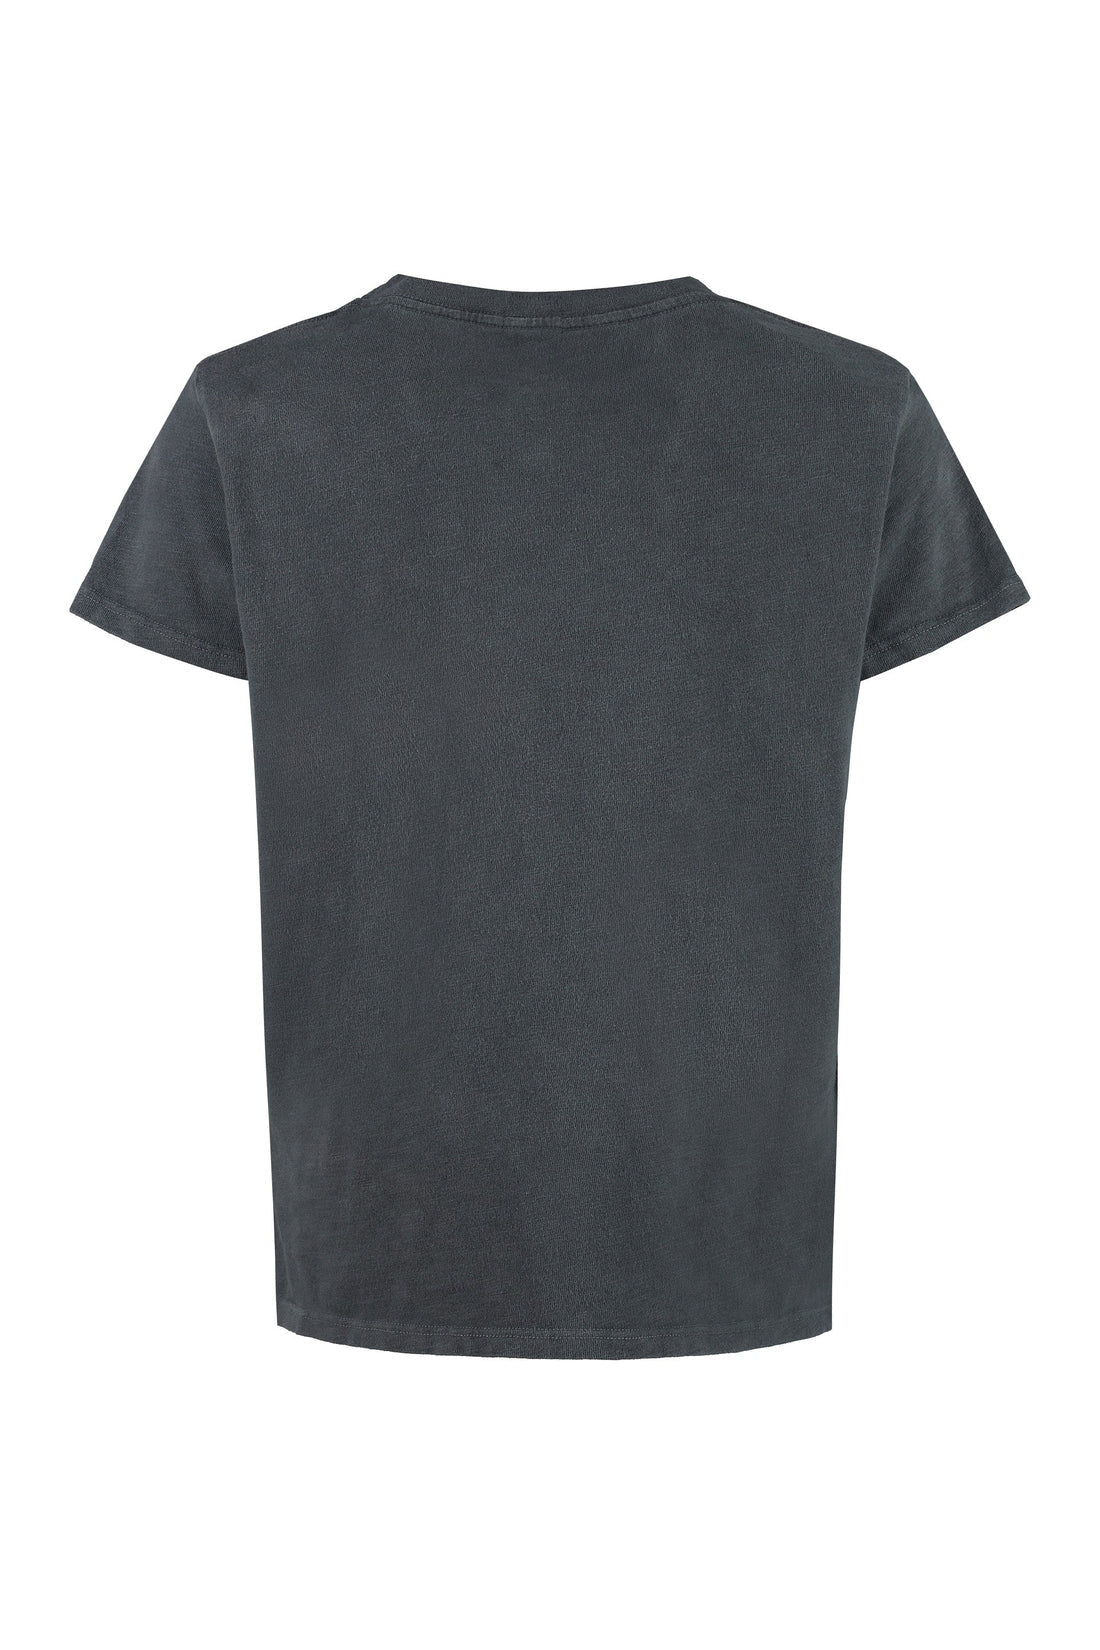 Mother-OUTLET-SALE-Printed cotton T-shirt-ARCHIVIST